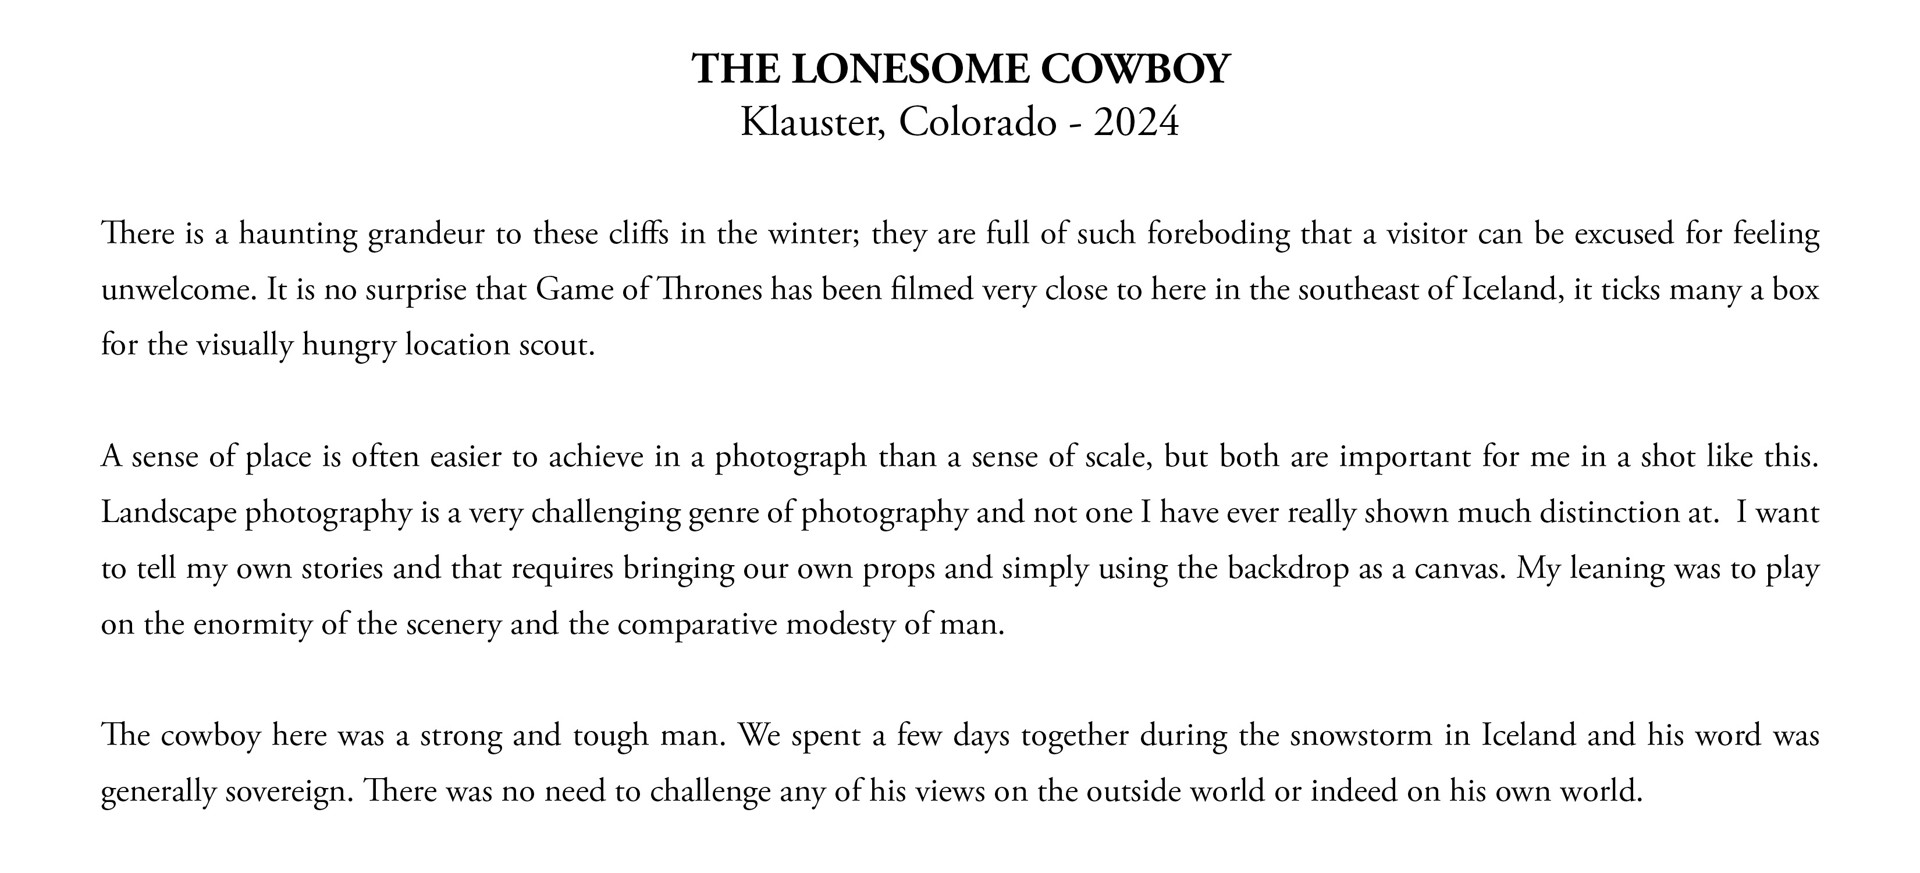 The Lonesome Cowboy by David Yarrow